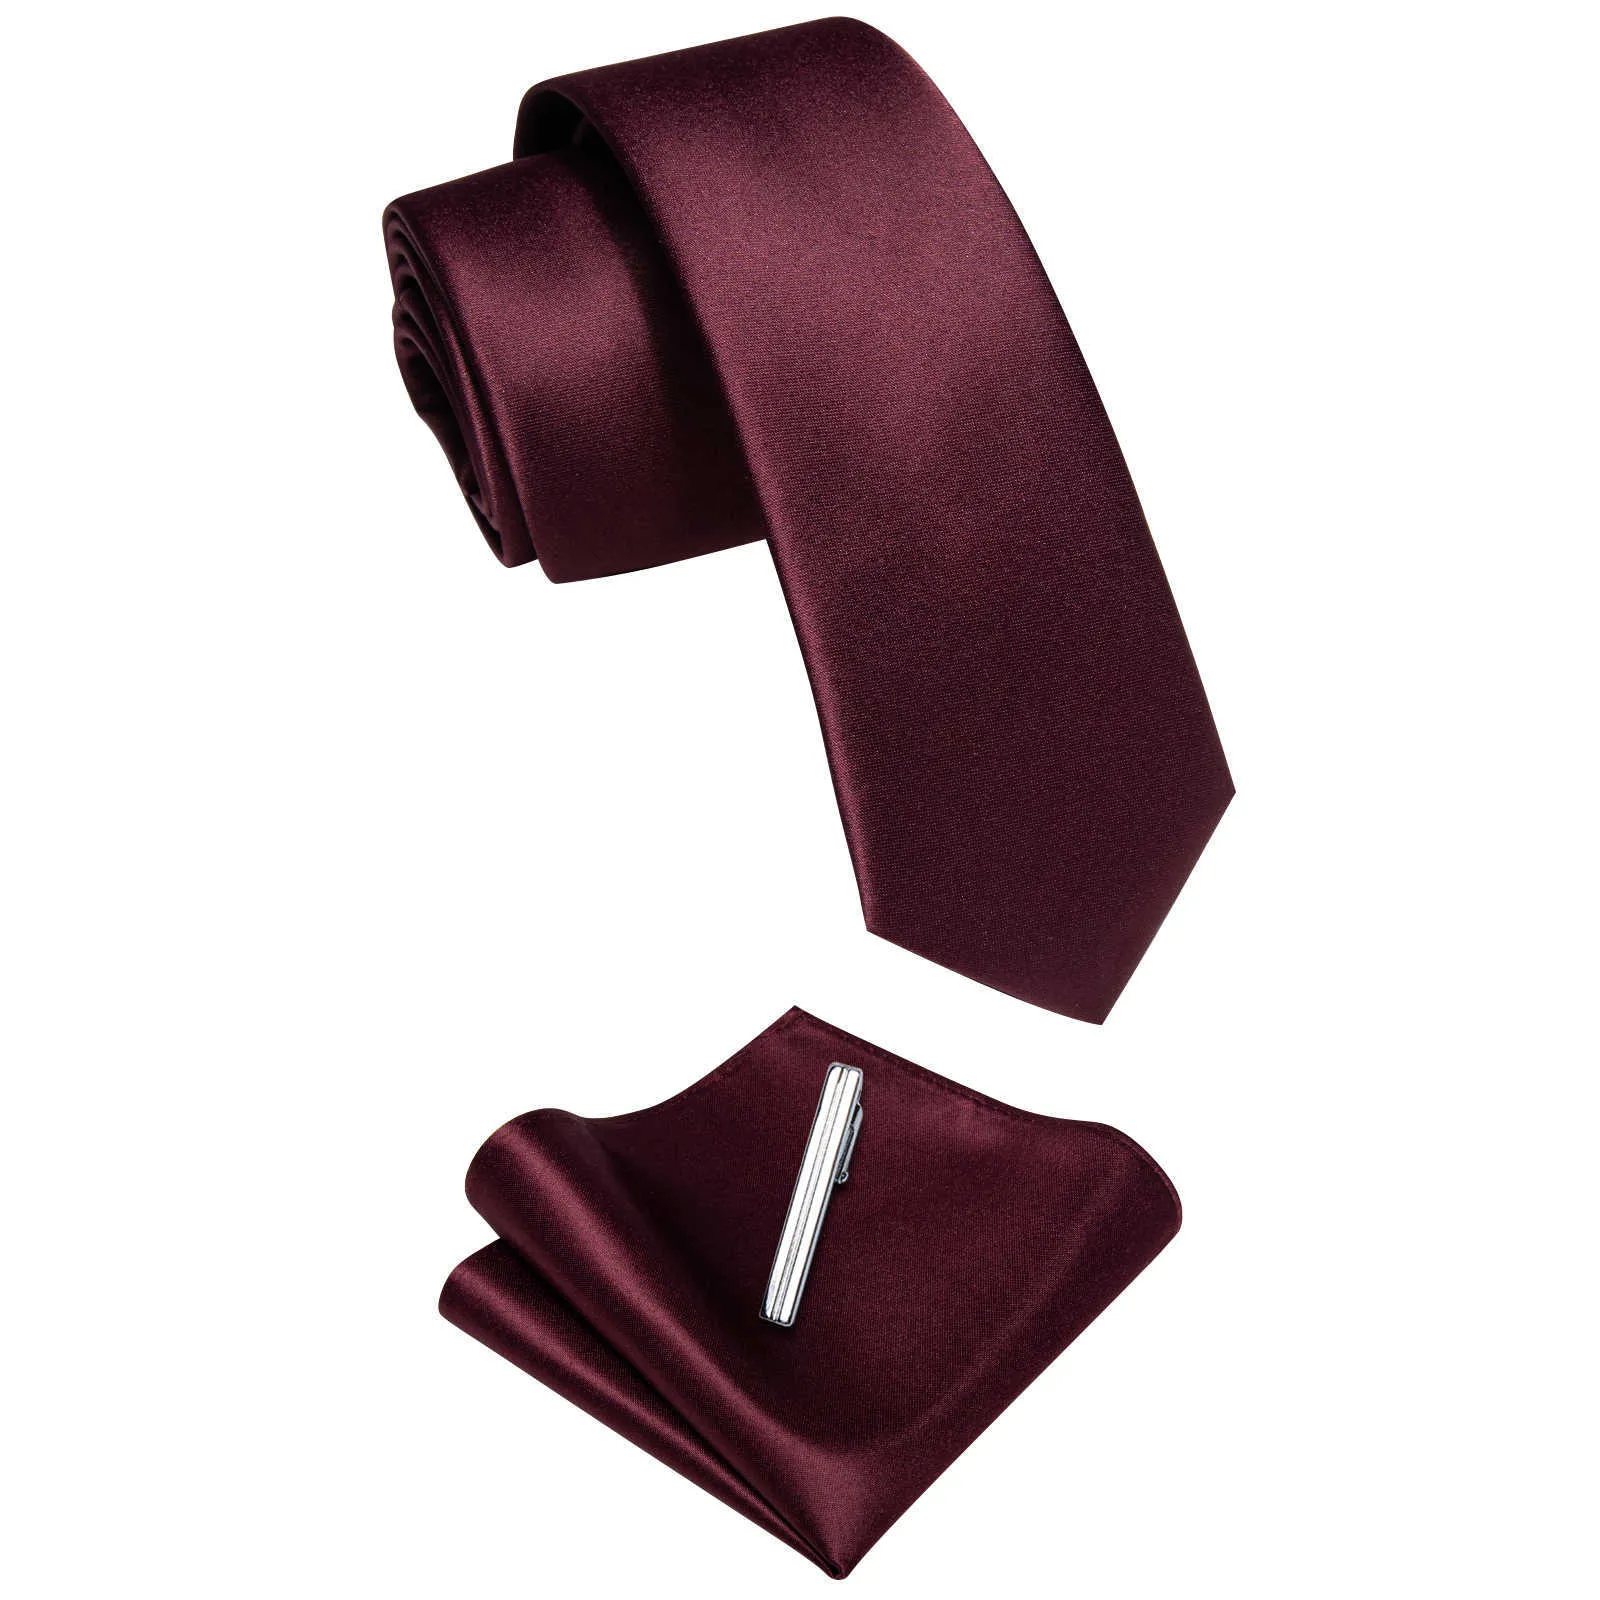 Neck Ties Burgundy Red Luxury Men's Tie Pocket Square Clip Set Fashion Silk Exported Brand 6 CM Slim Necktie for Man Accessories Gifts